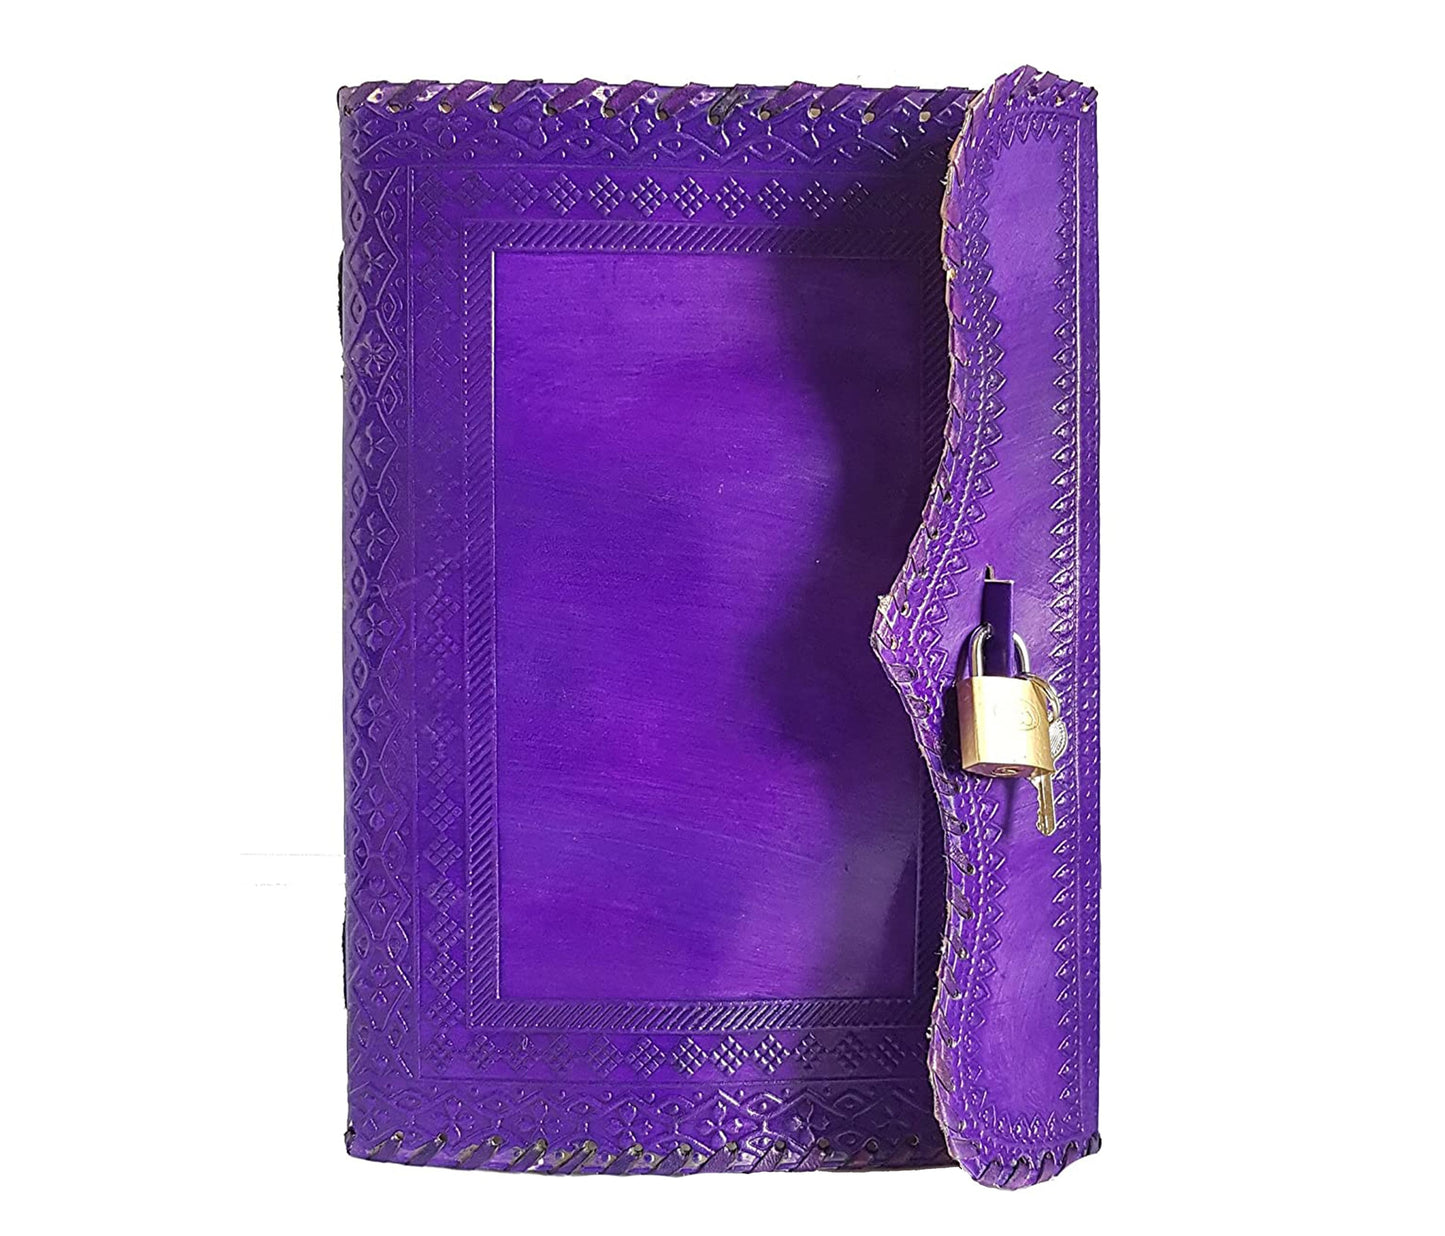 Handmade Vintage Purple Leather Journal with Lock